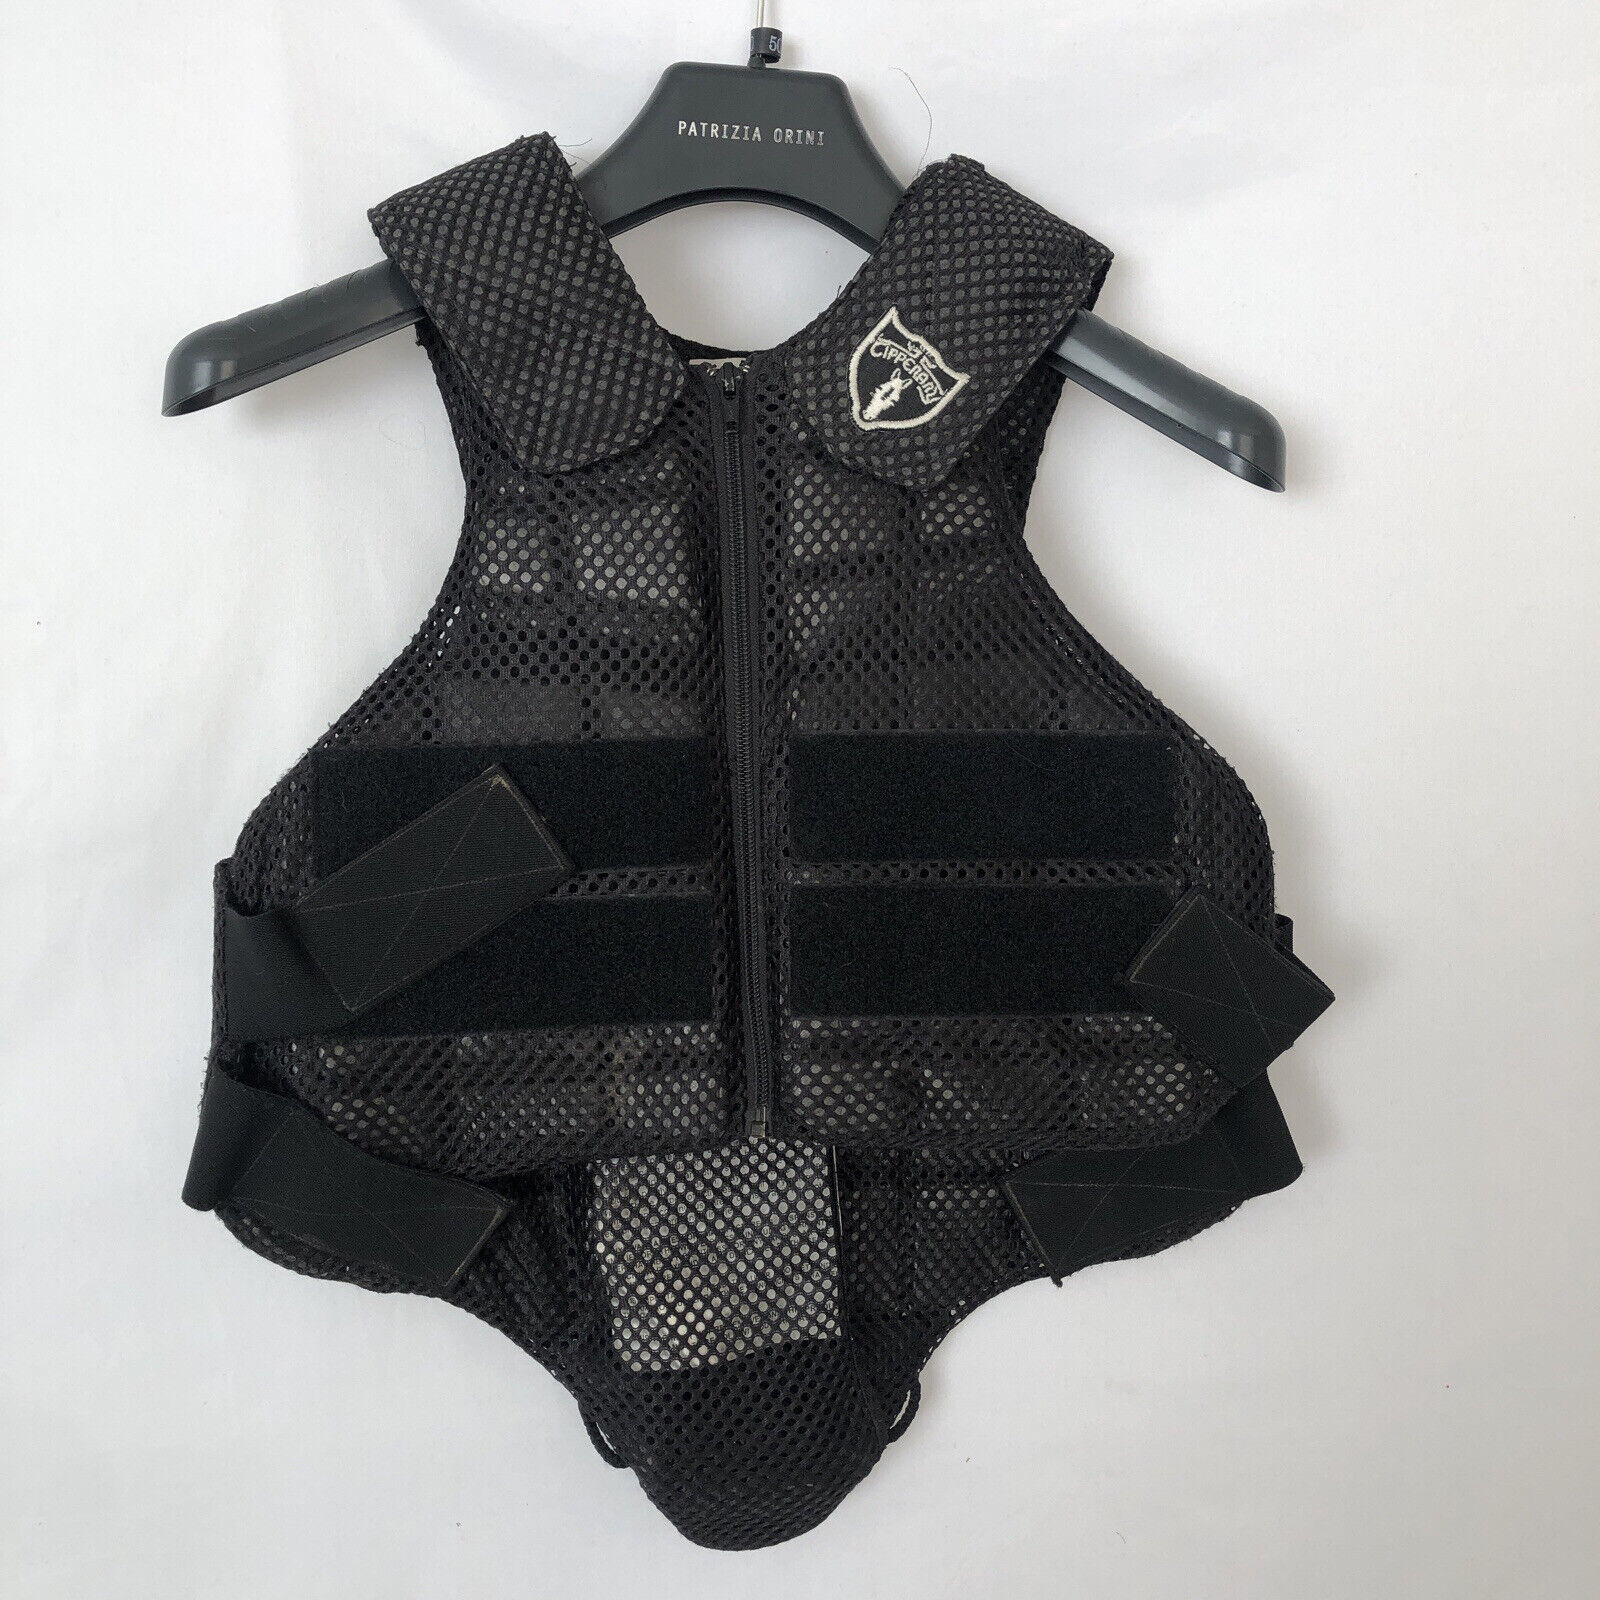 Pheonix Performance Products Protective Vest Style 3009 Black Size Xs